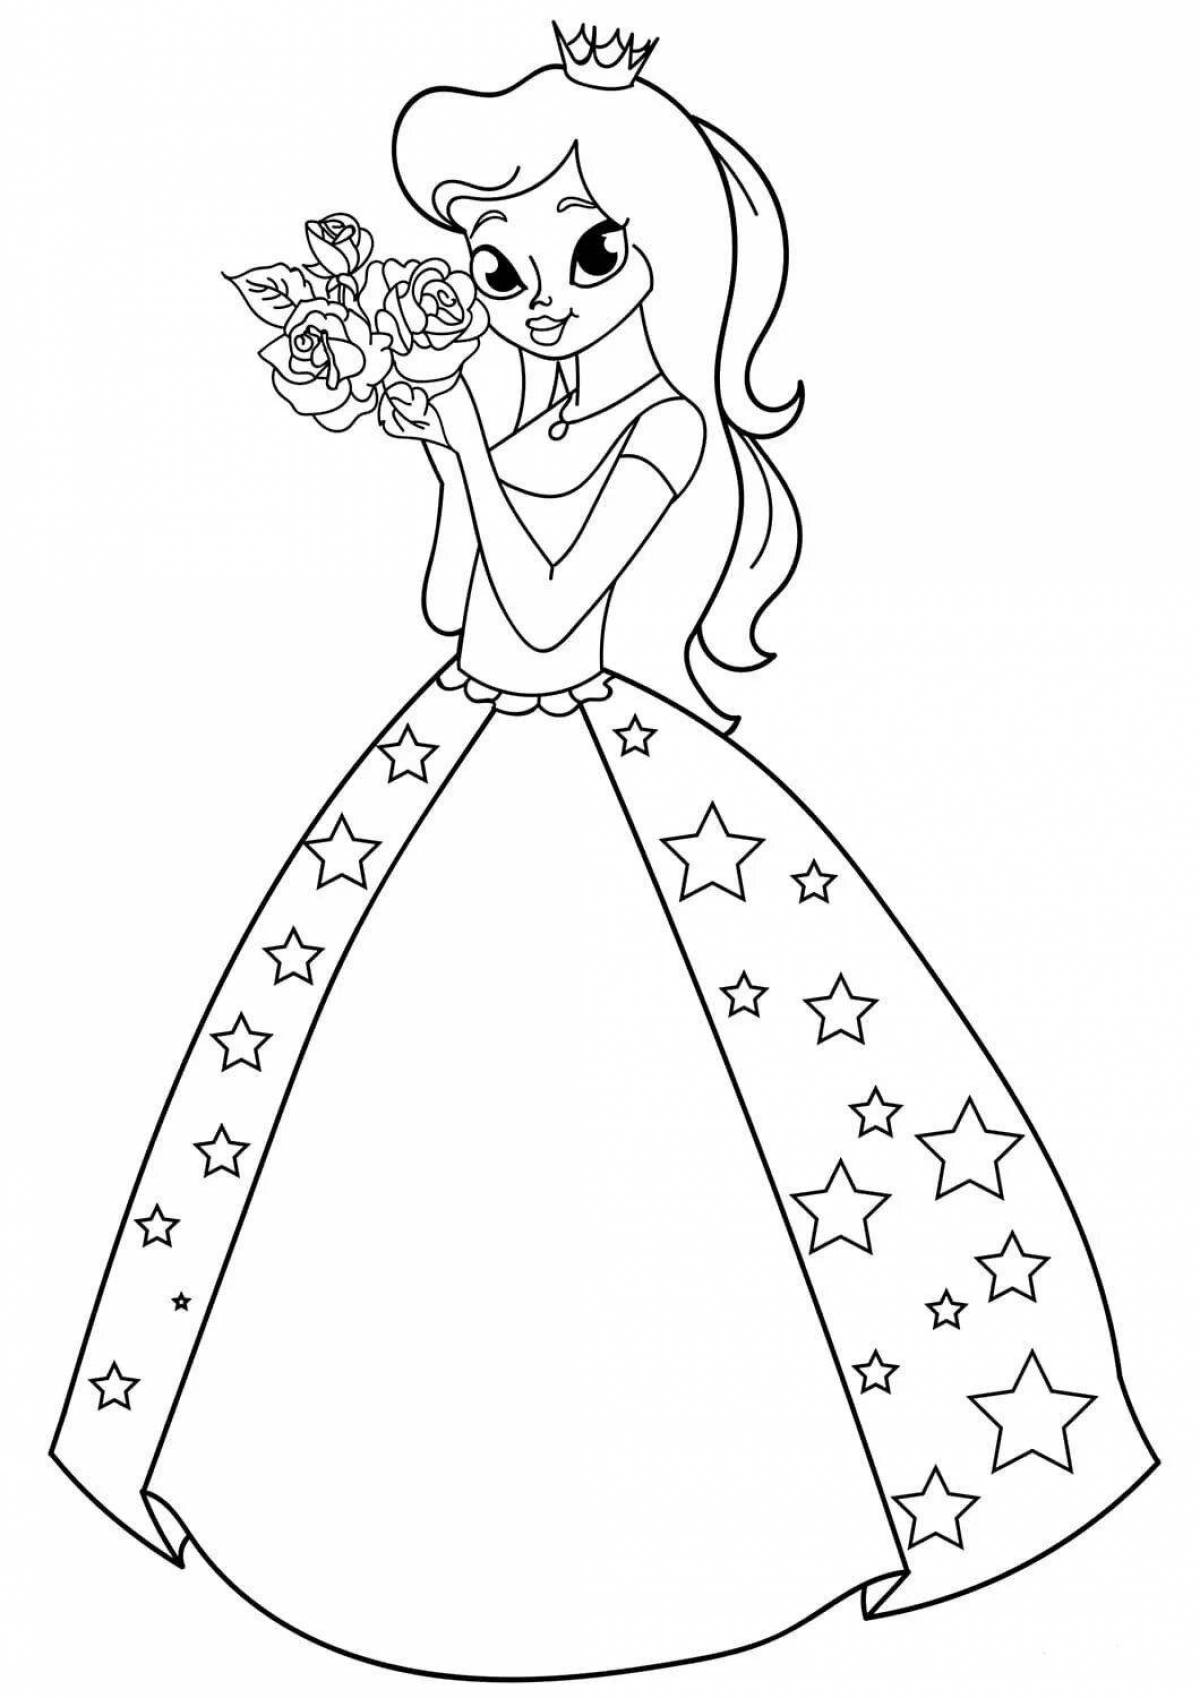 Exotic princess coloring book for kids